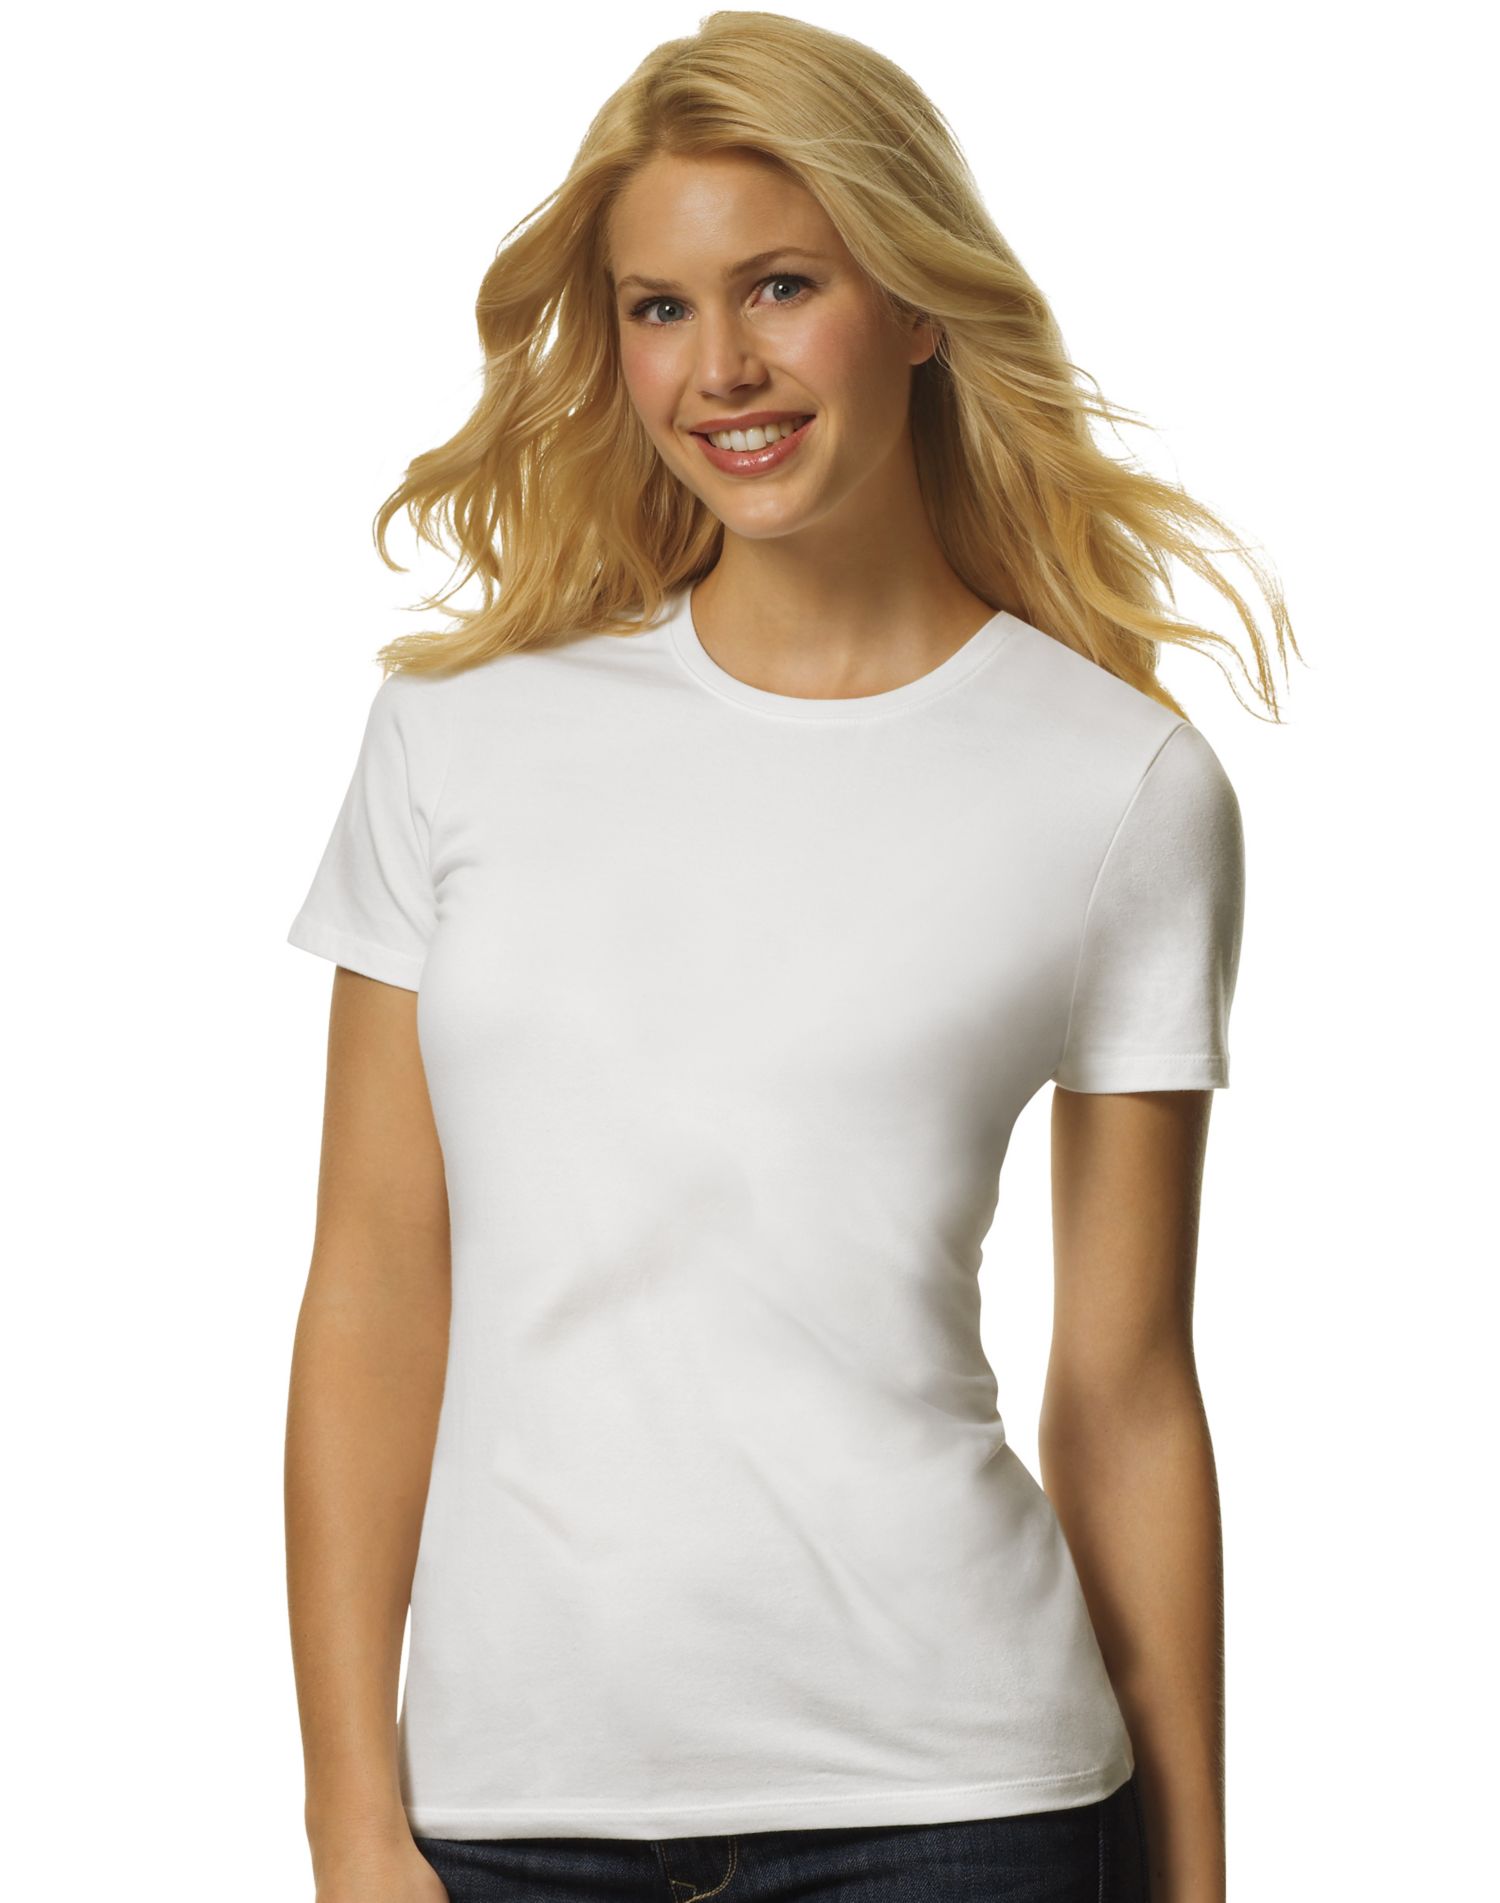 Hanes women's t-shirt white 50W3AS - Hanes Women's Jersey Crew Tee